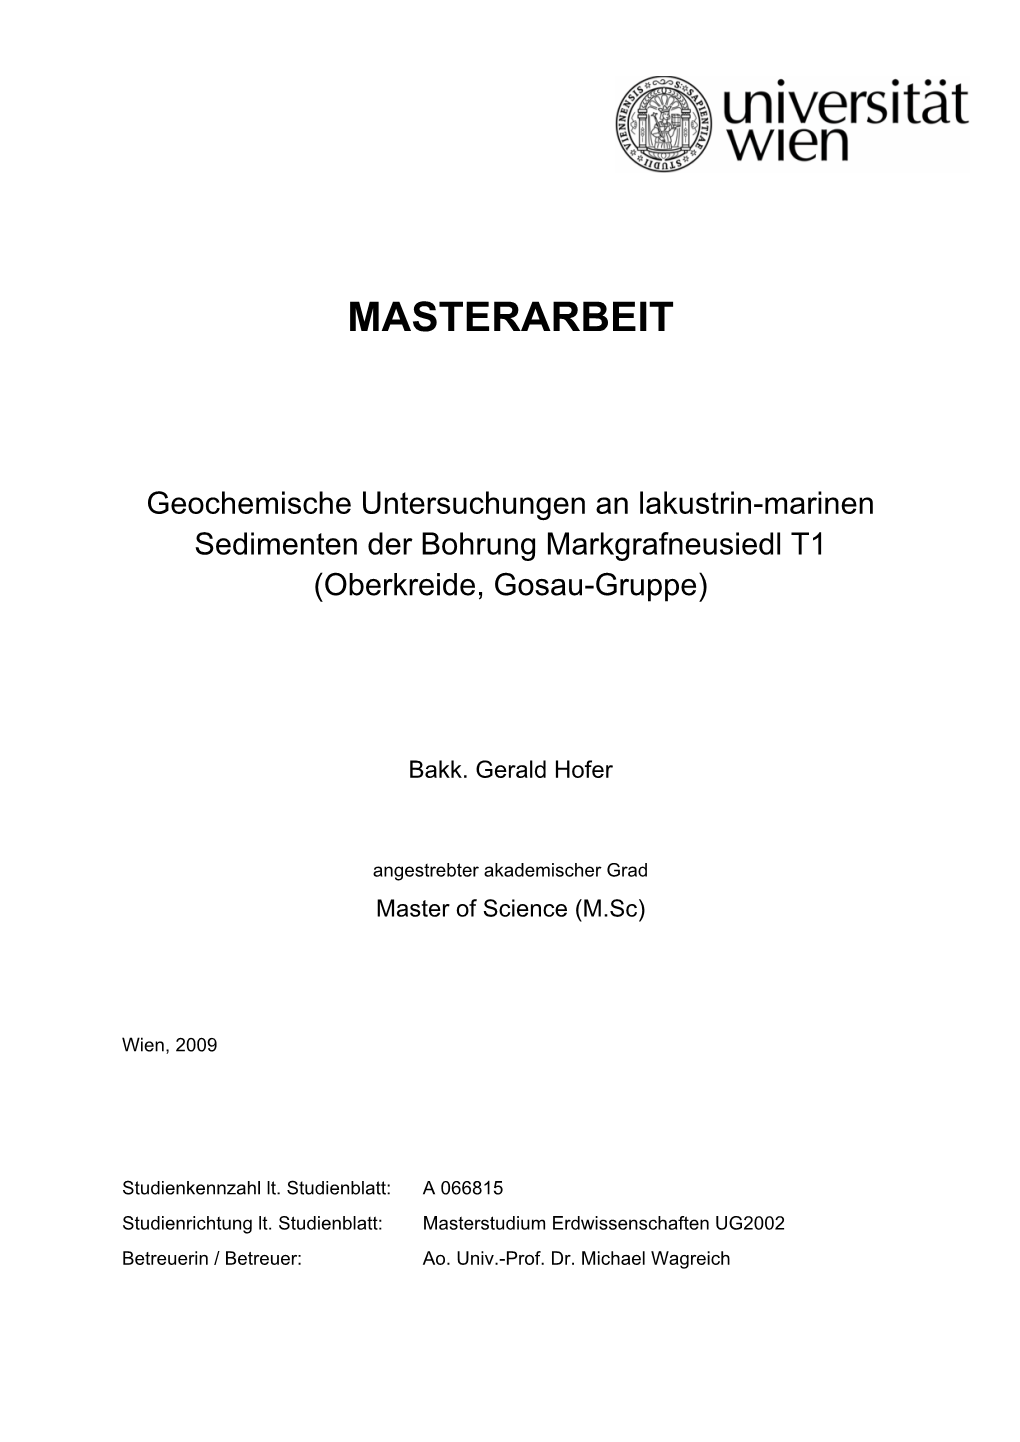 Geochemische Untersuchungen an Lakustrin-Marinen Sedimenten Der Bohrung Markgrafneusiedl T1 (Oberkreide, Gosau-Gruppe)